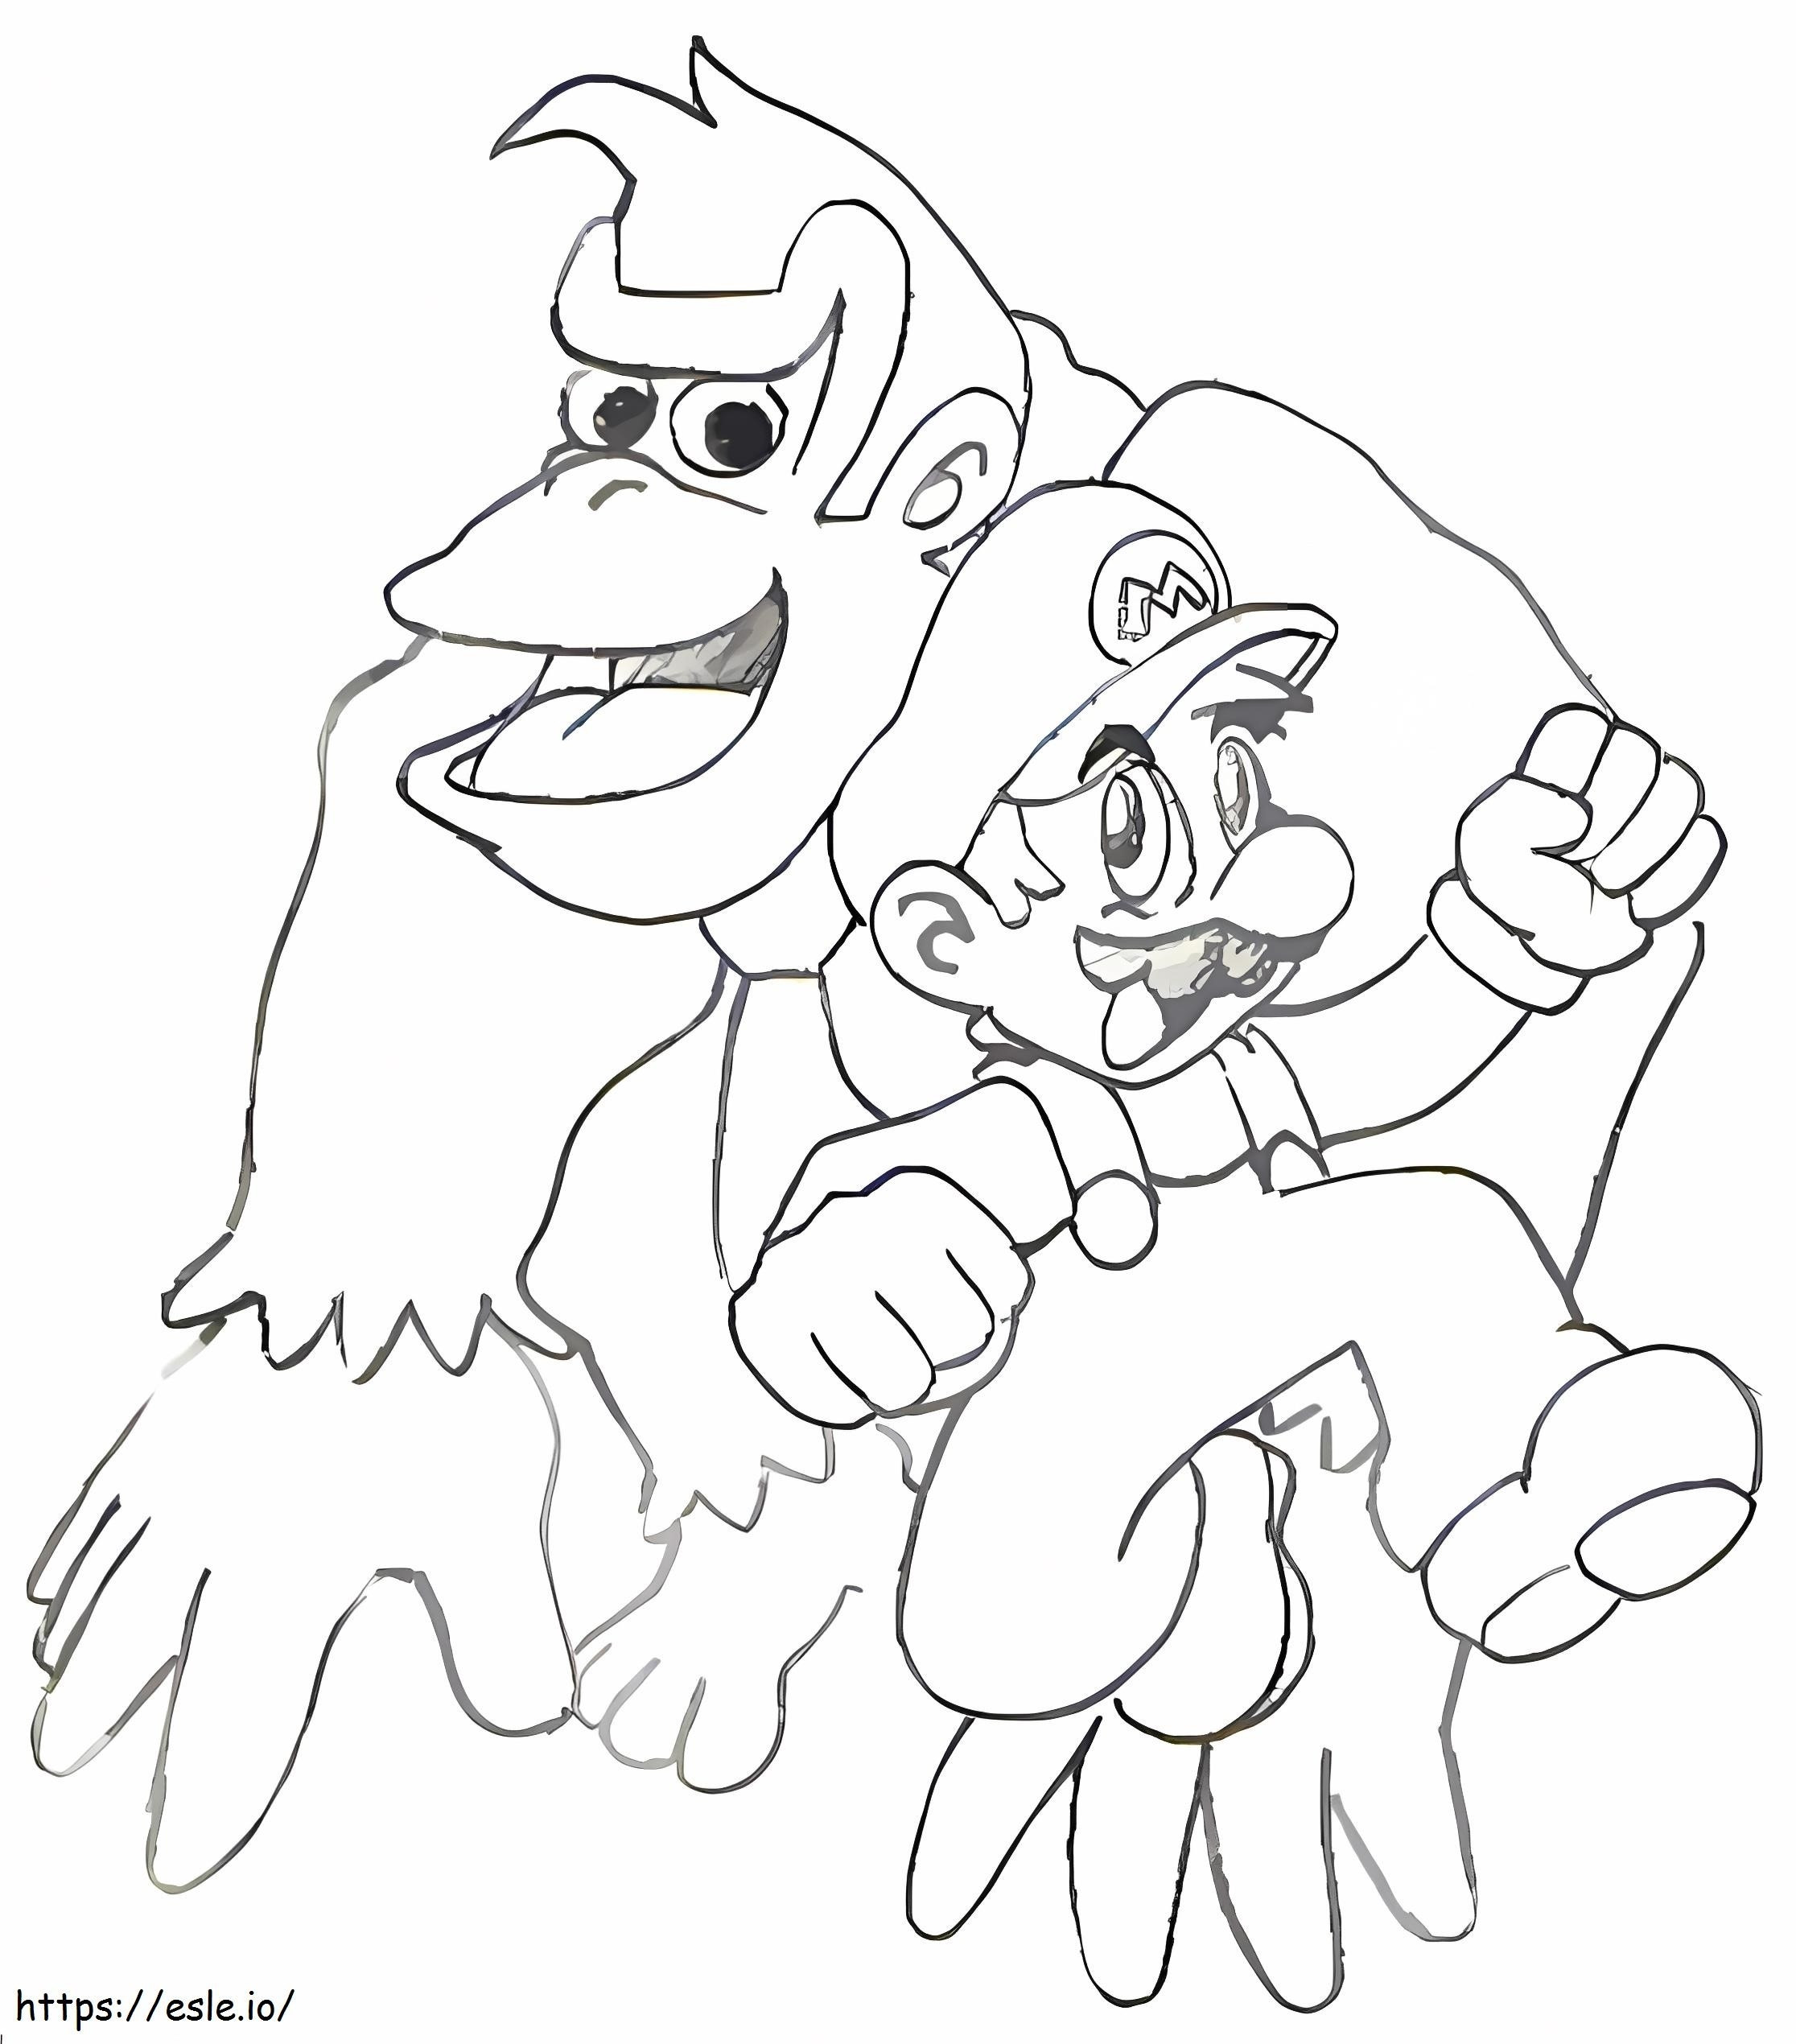 Mario și Donkey Kong de colorat